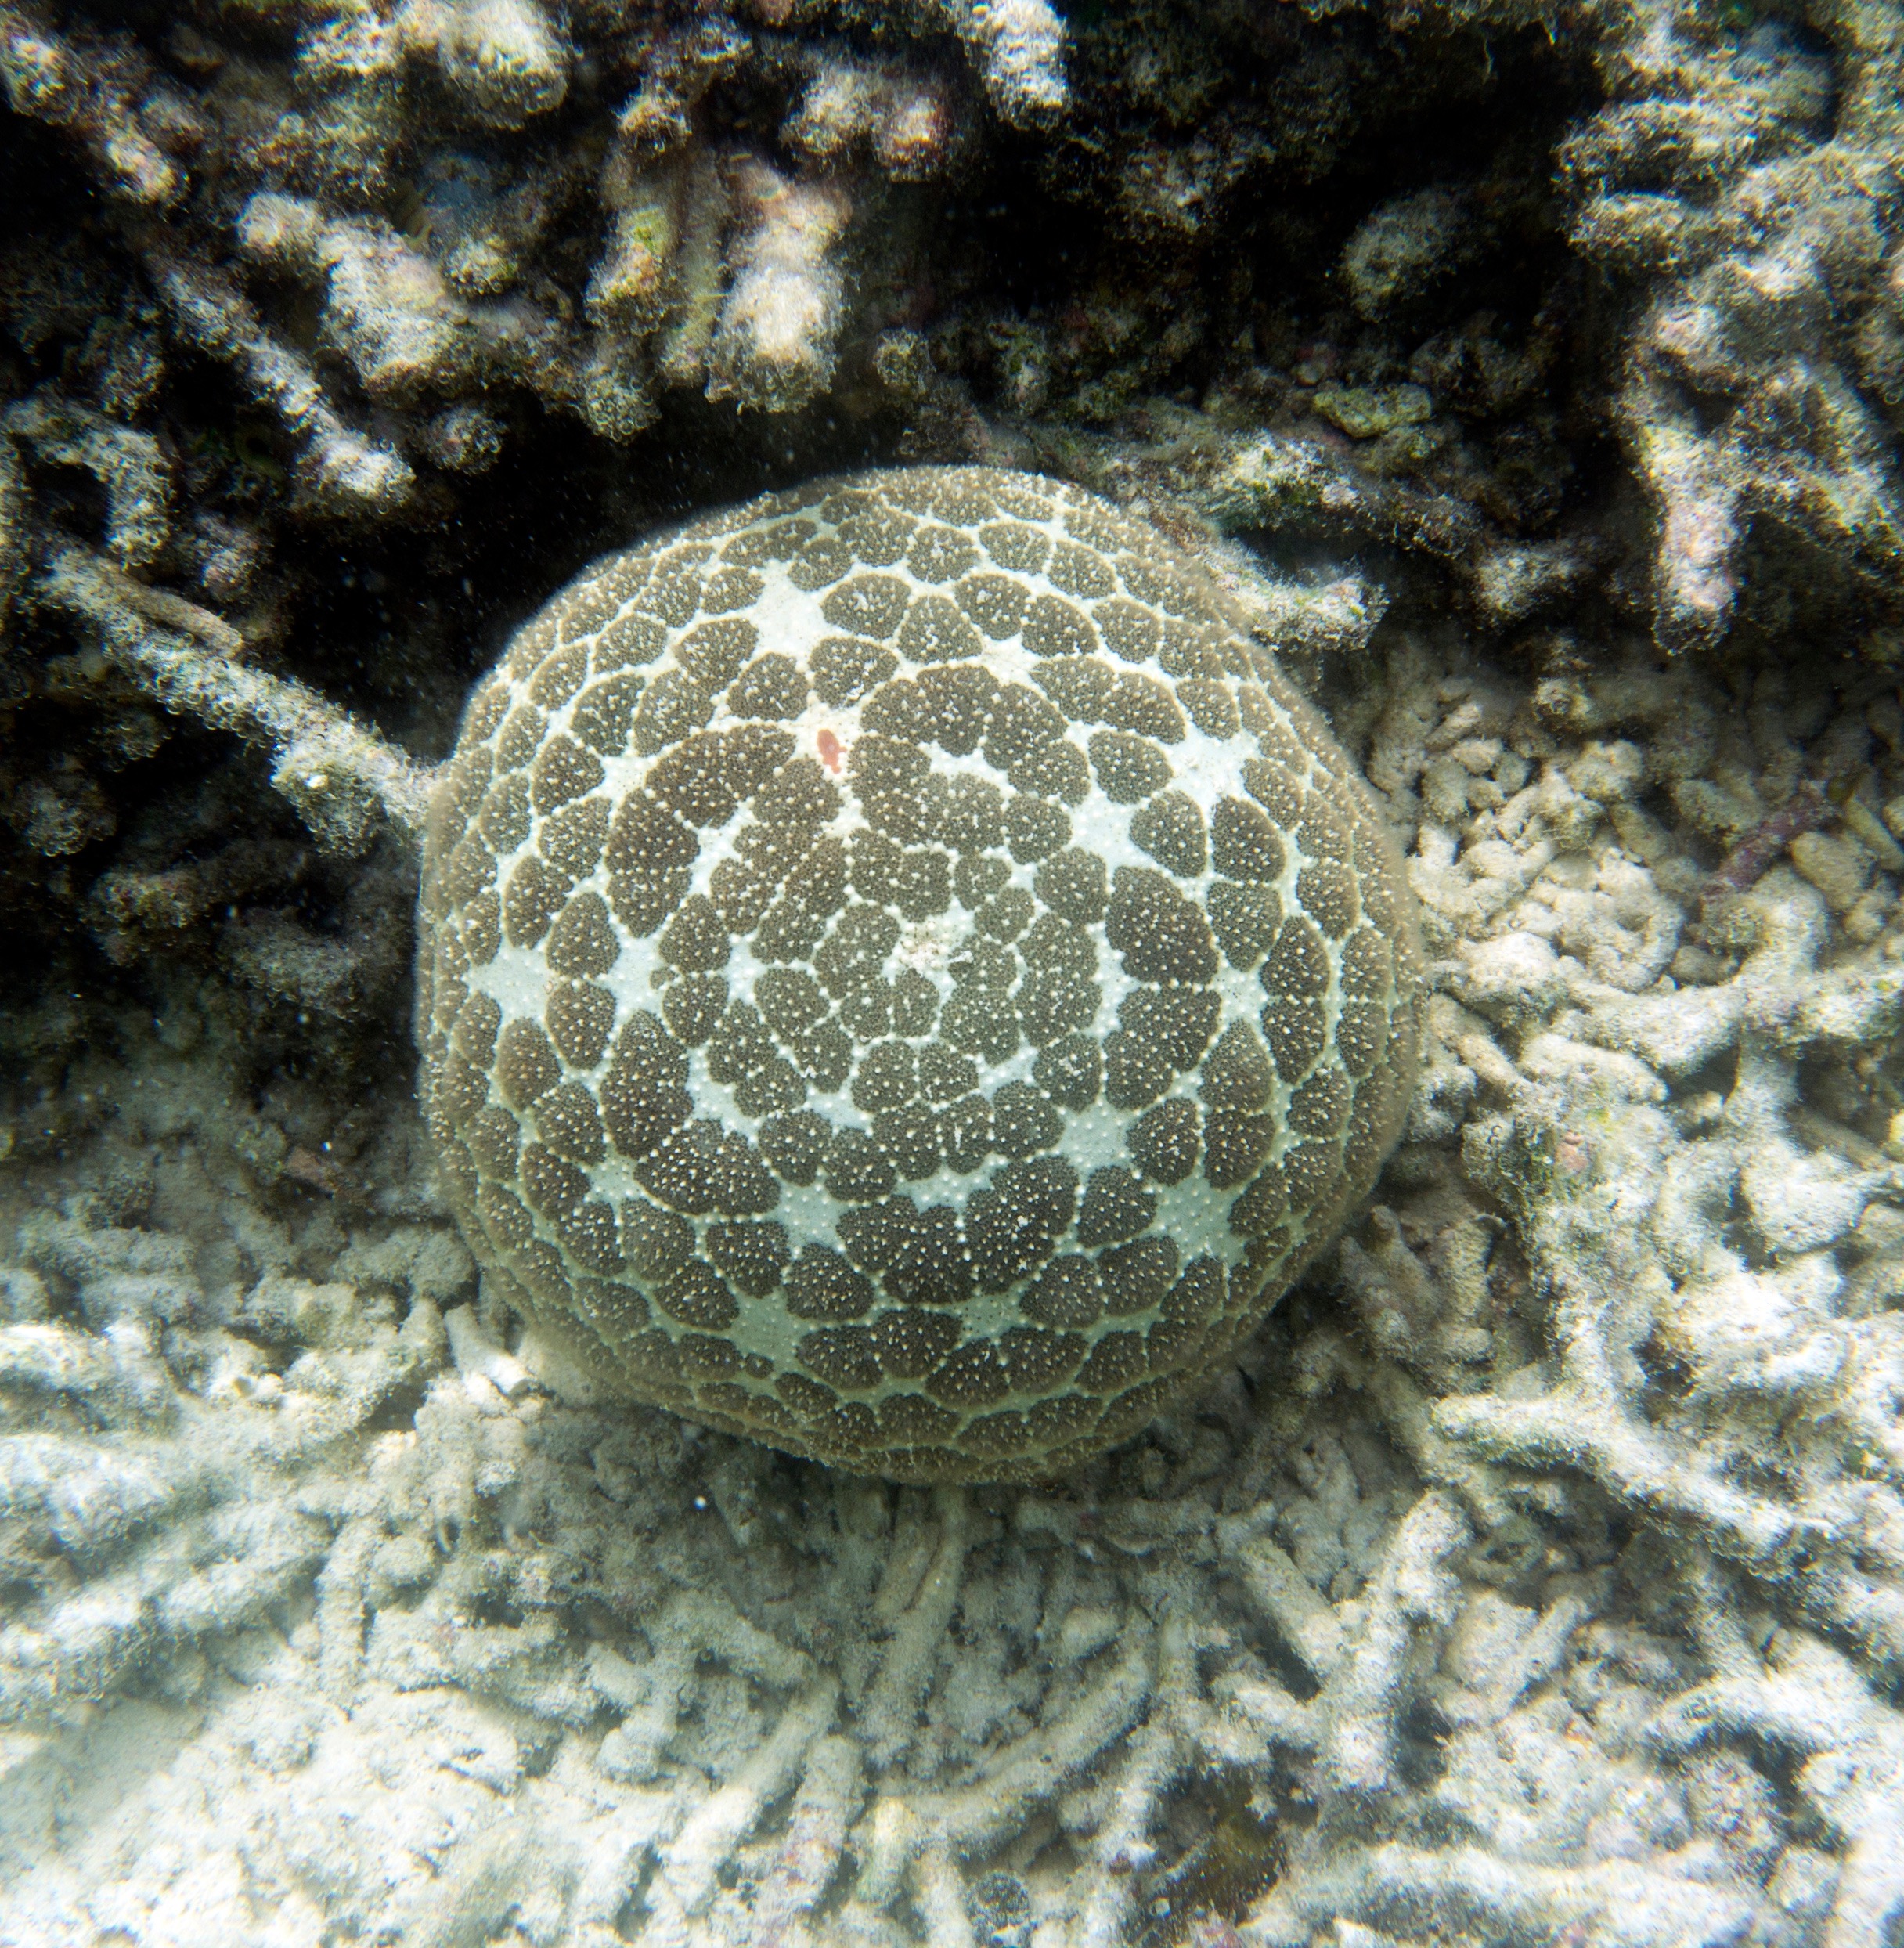 Culcita novaeguineae, Pincushion starfish